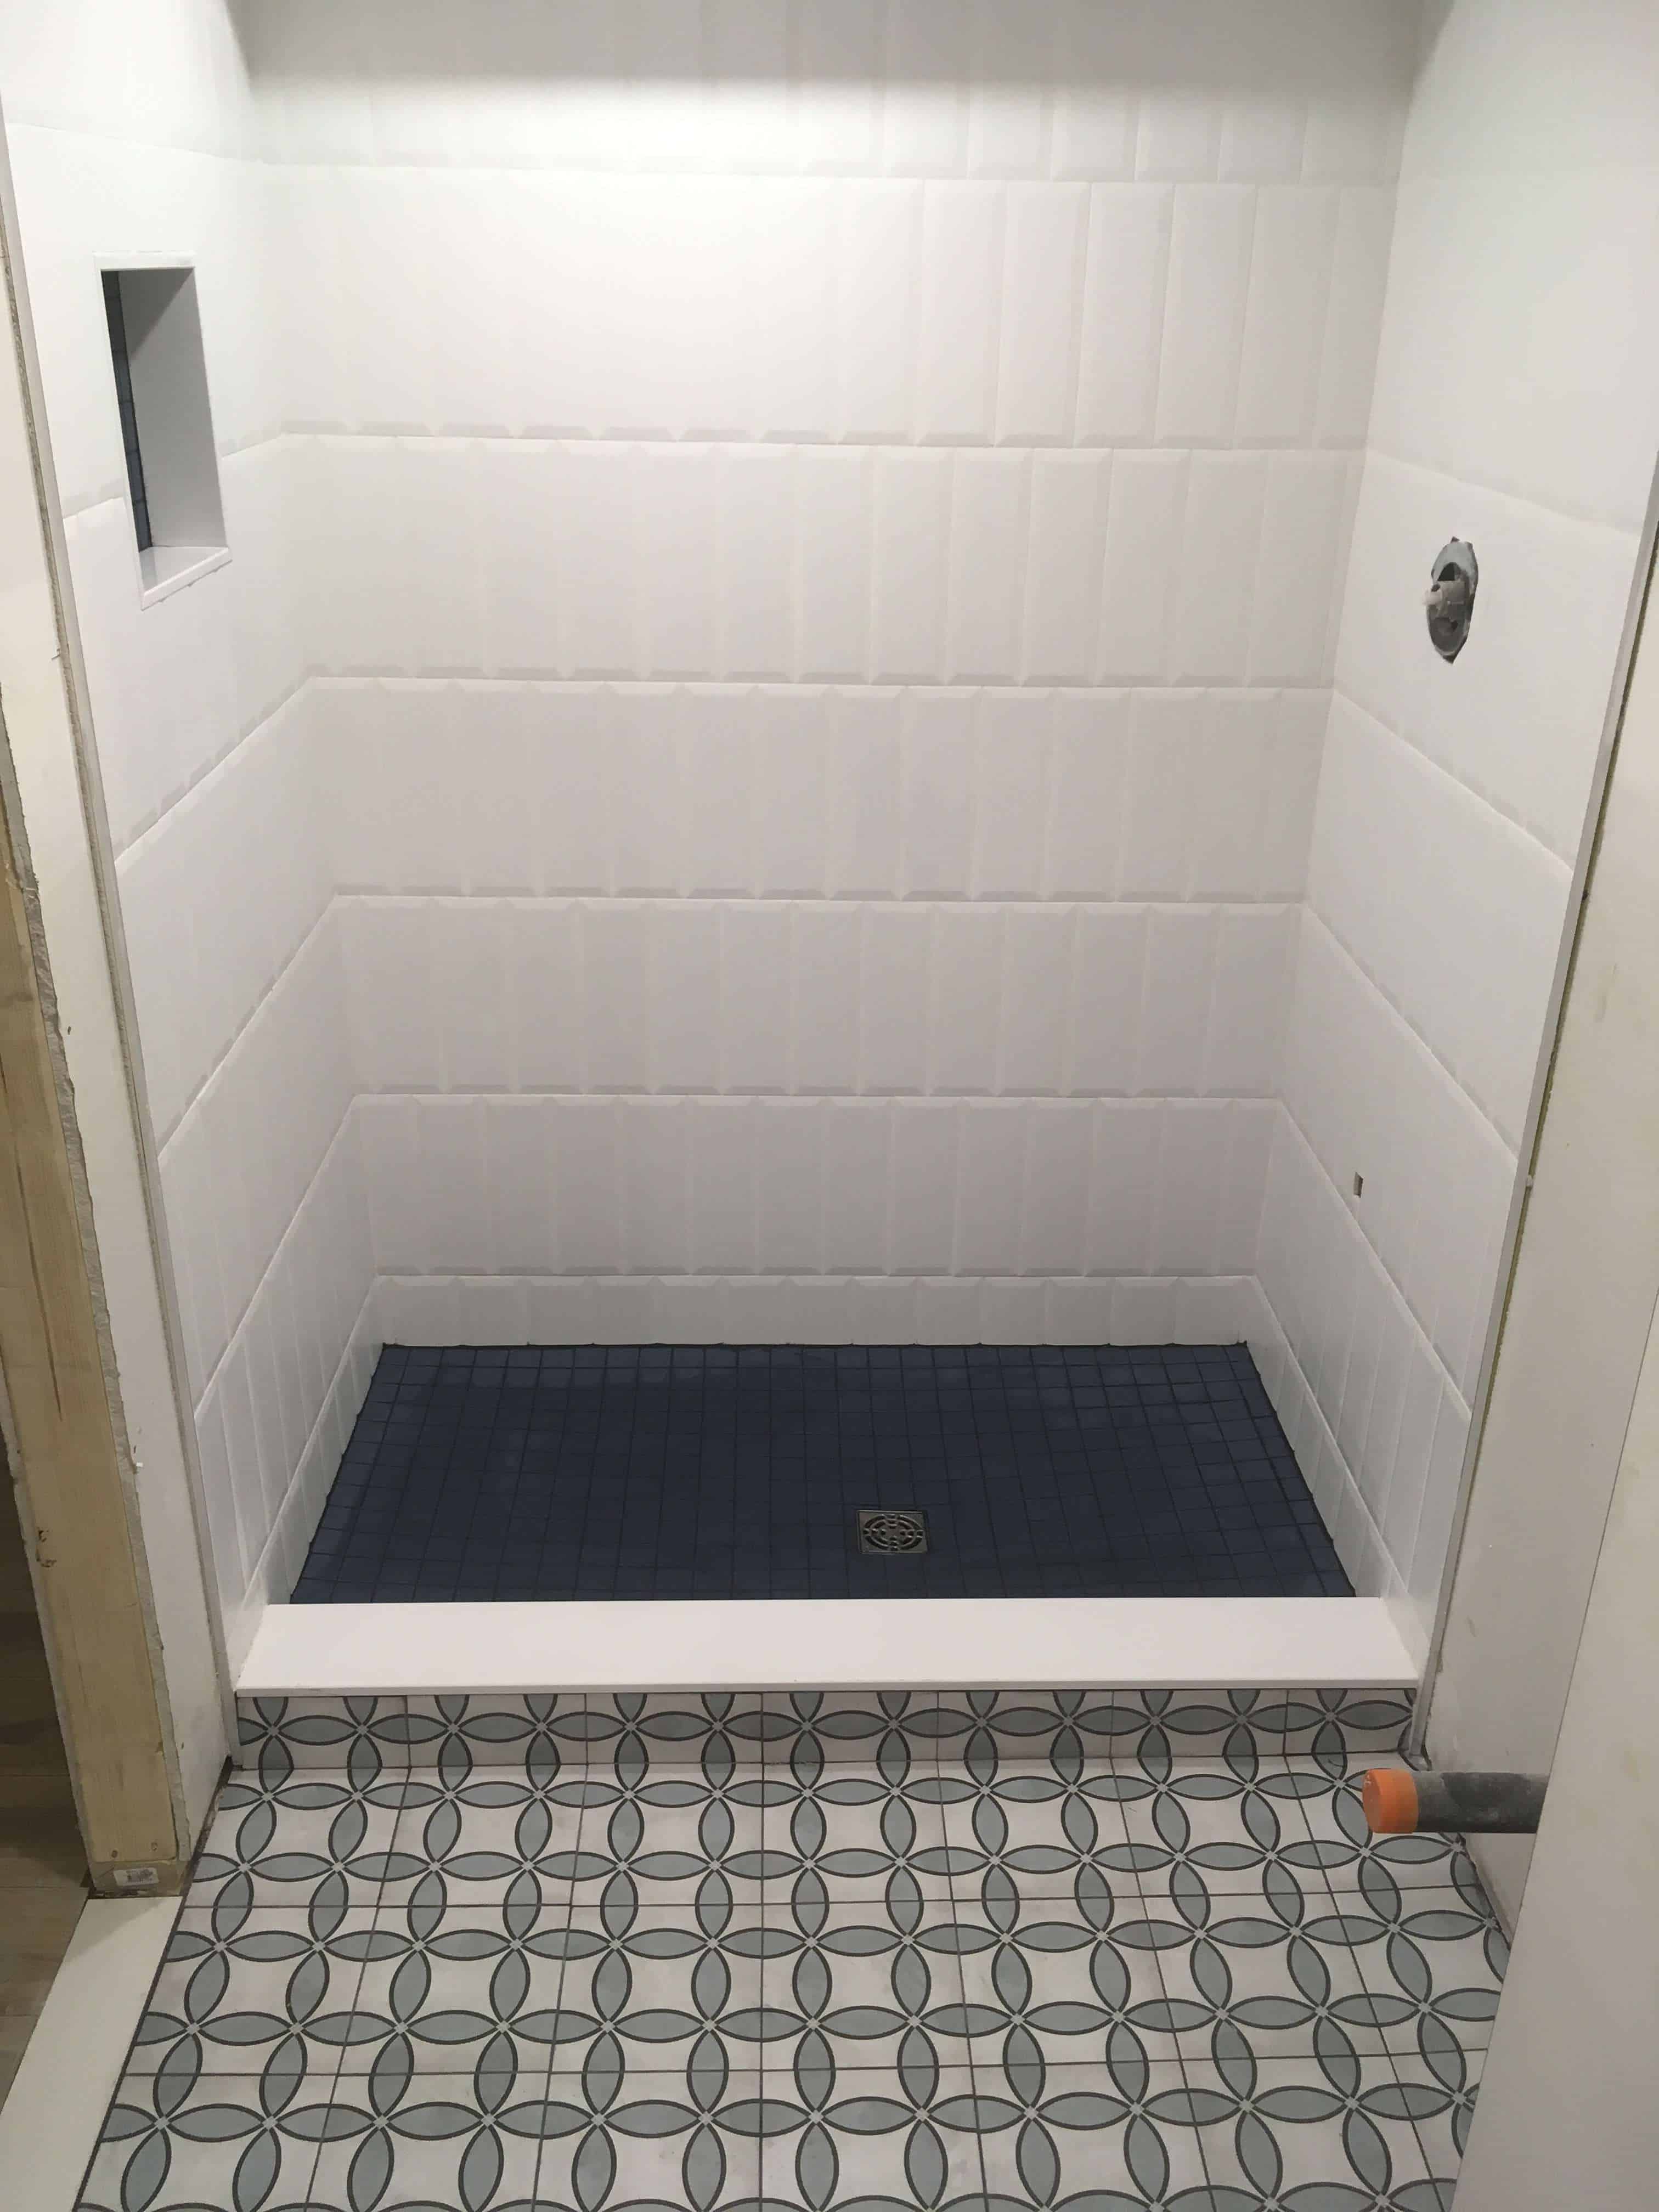 Top Tile Design Ideas For Your Shower Floor Tile Canadian Tile Pro | My ...